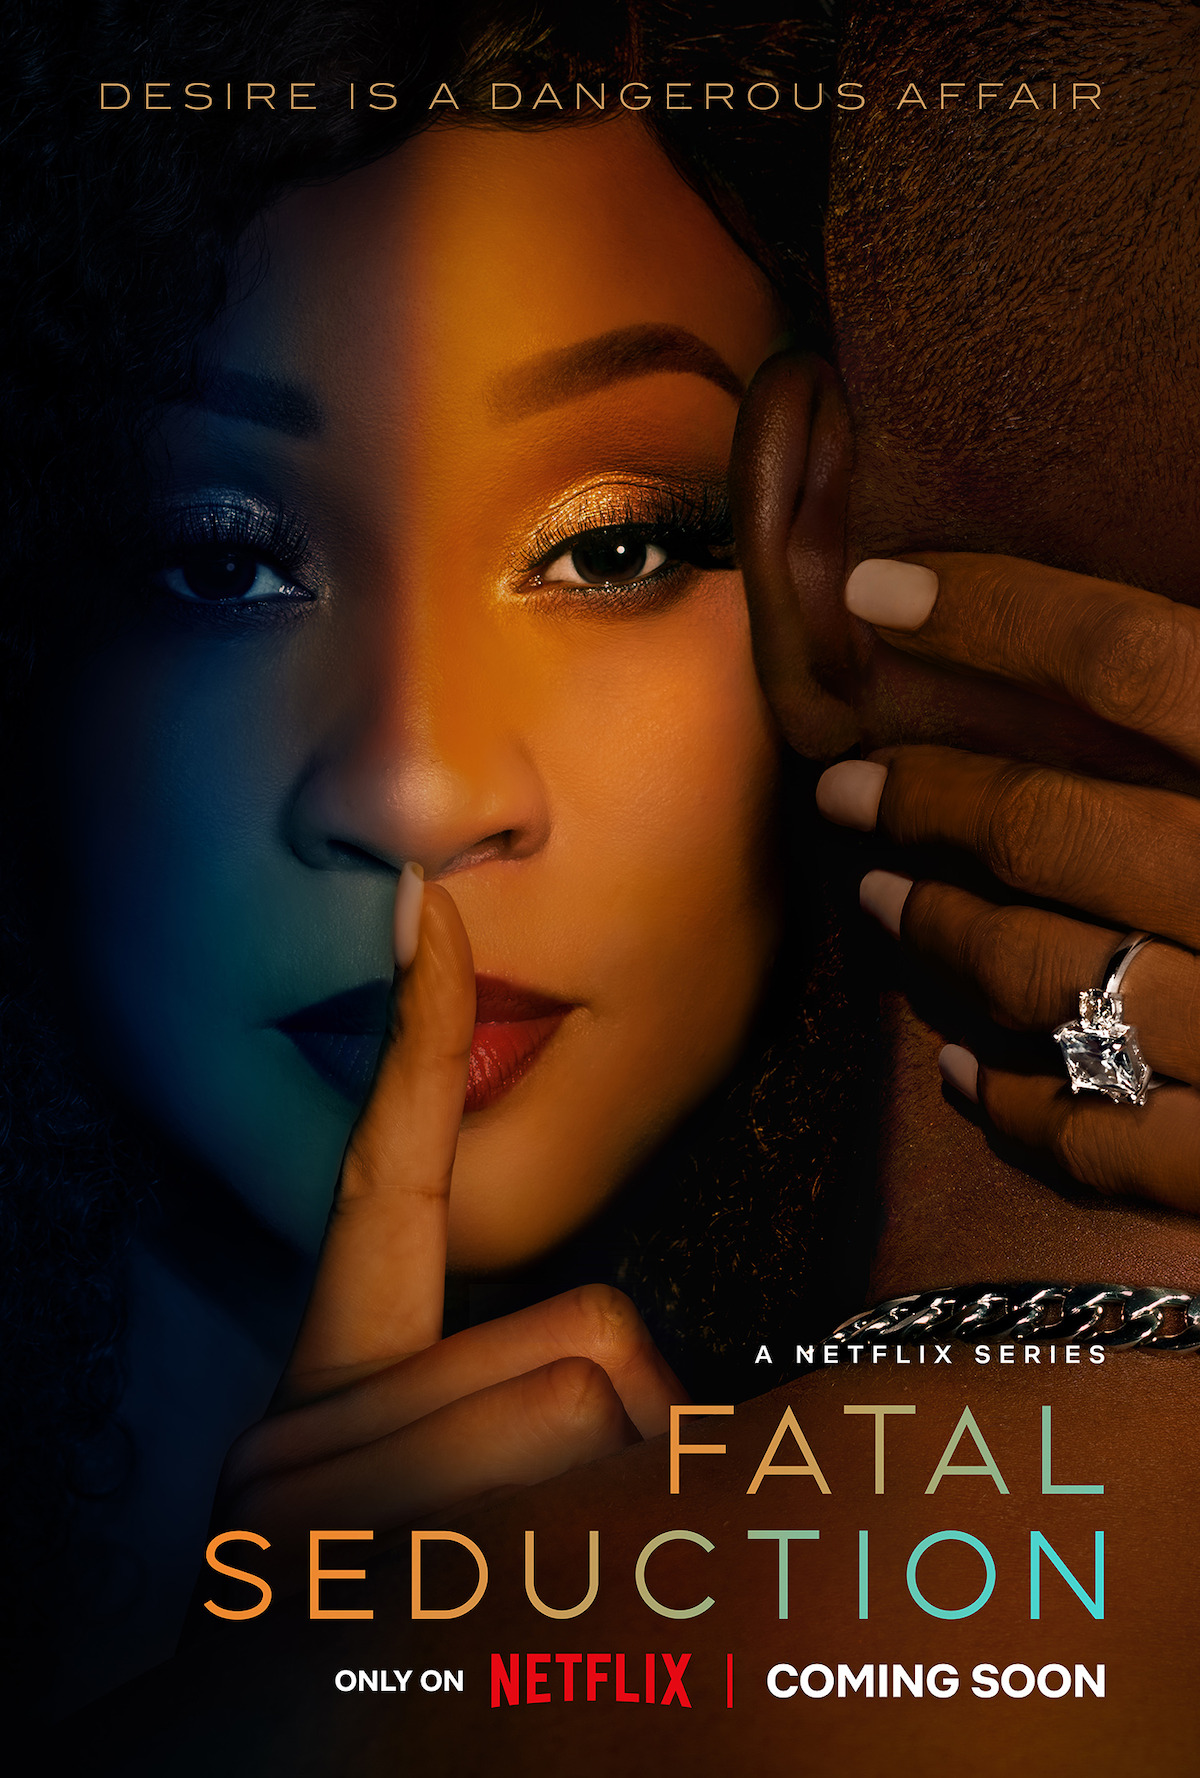 Fatal Seduction Cast, Plot, Release Date and Trailer image